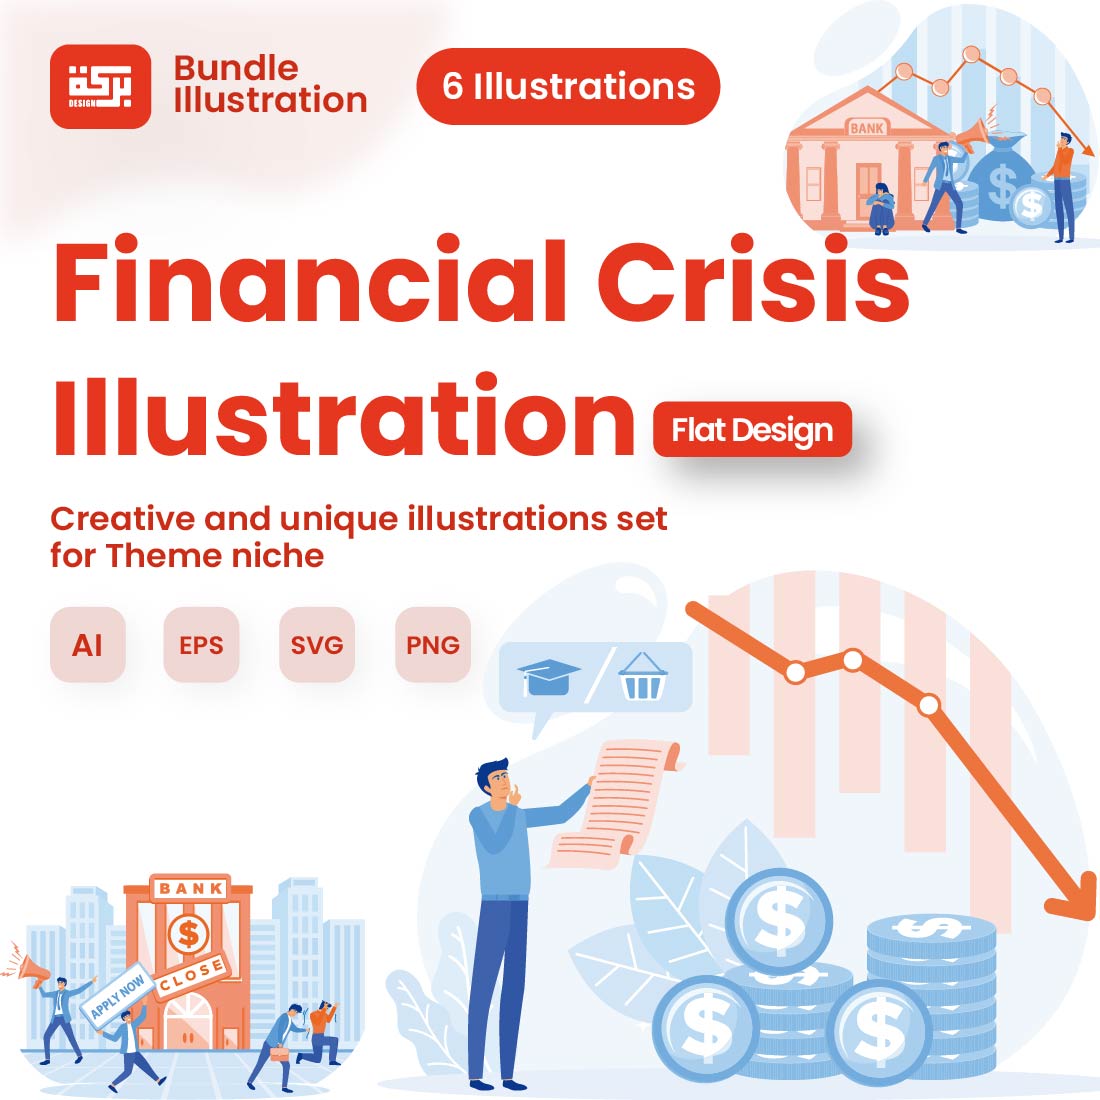 Financial Crisis Illustration Design cover image.